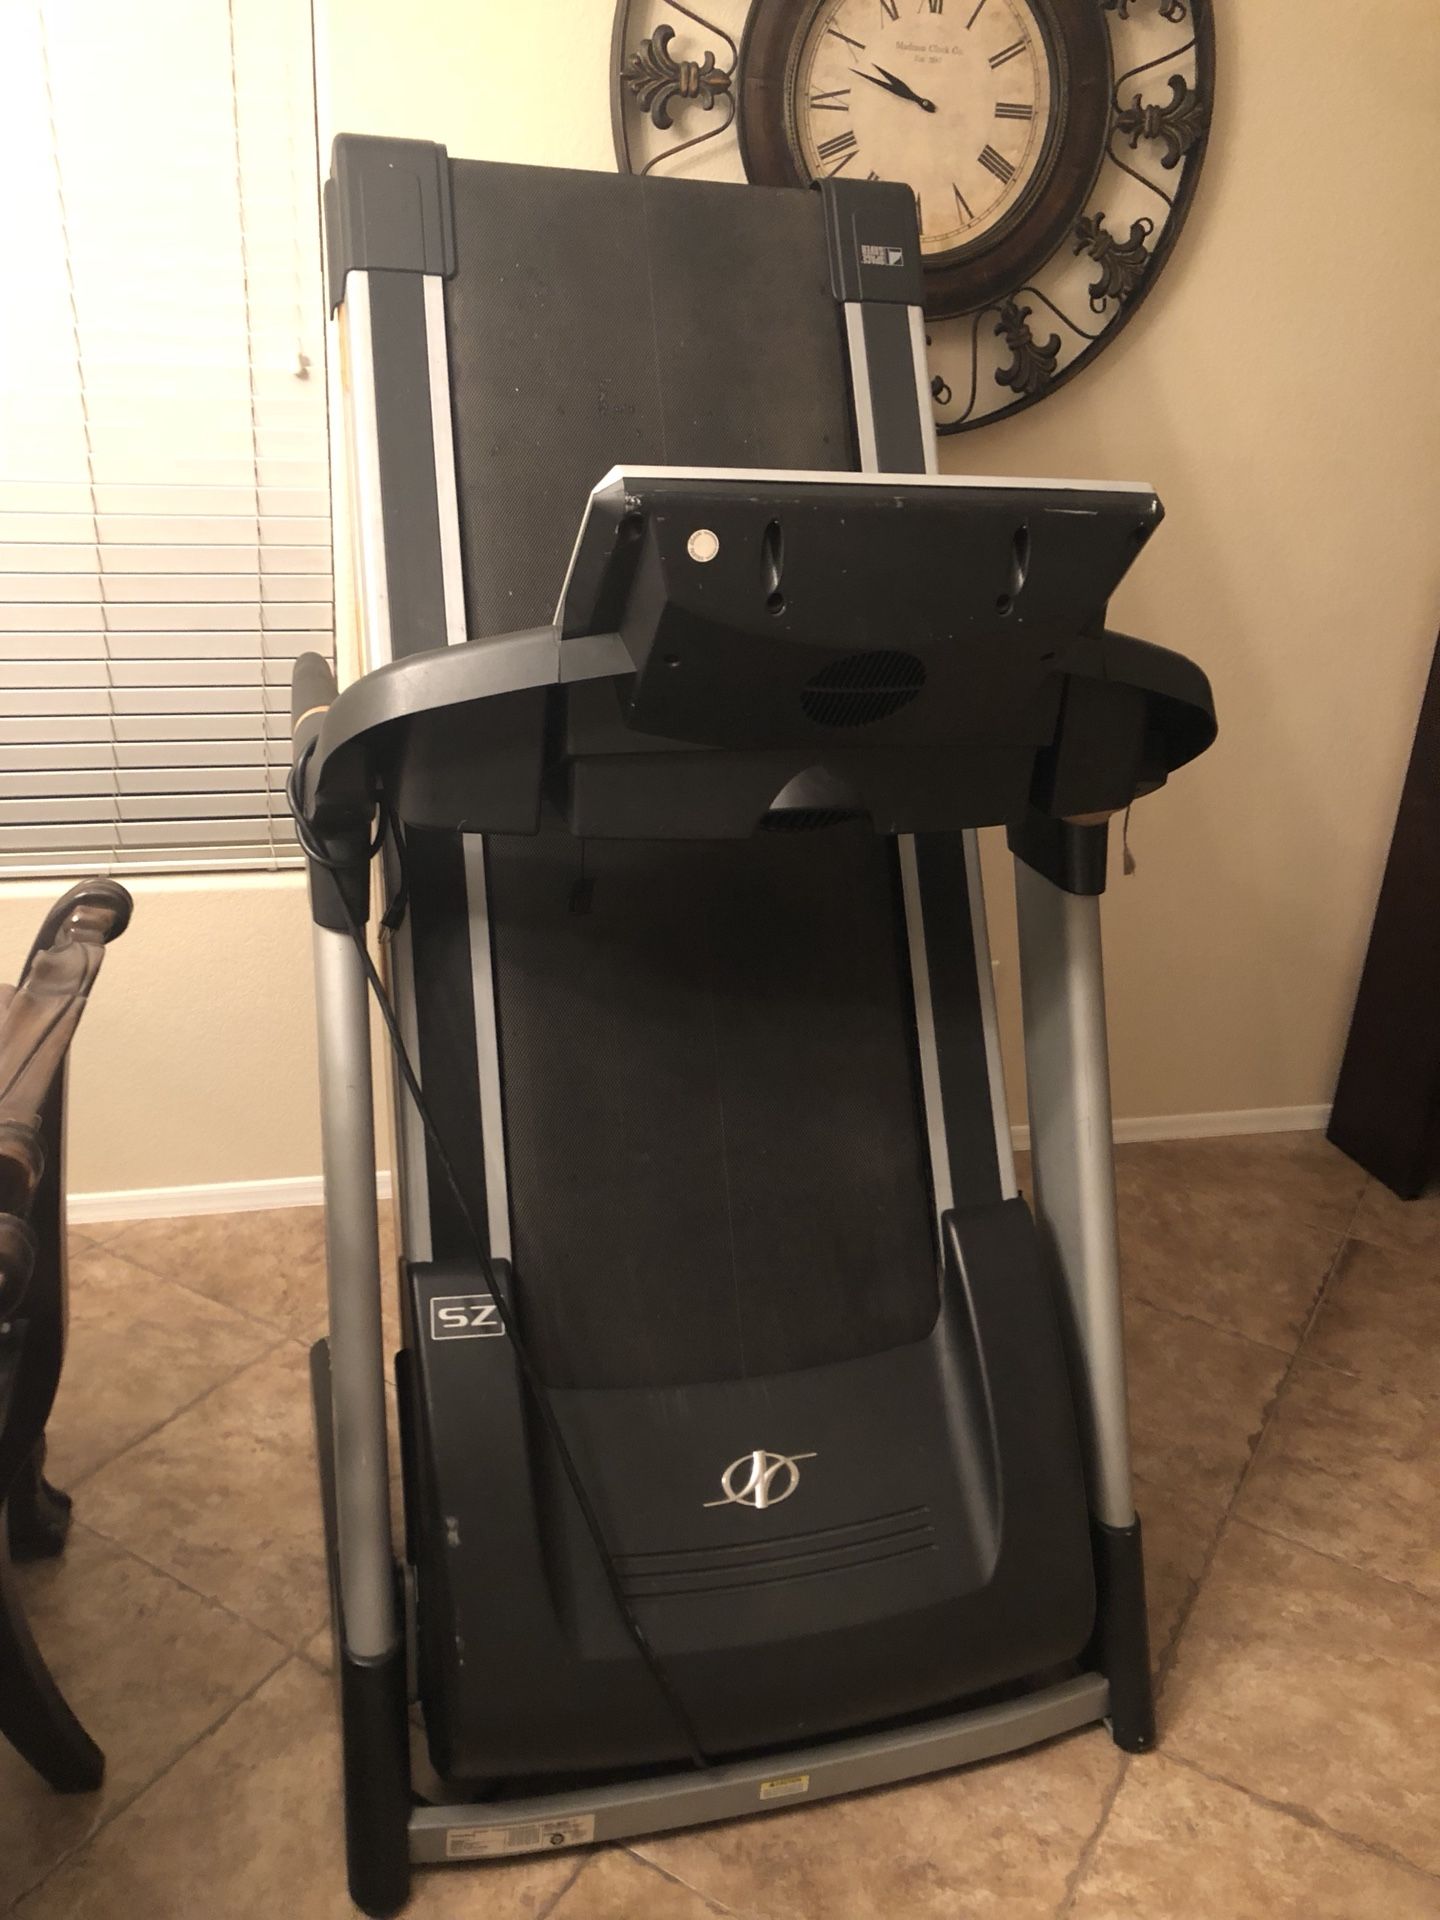 Almost new treadmill